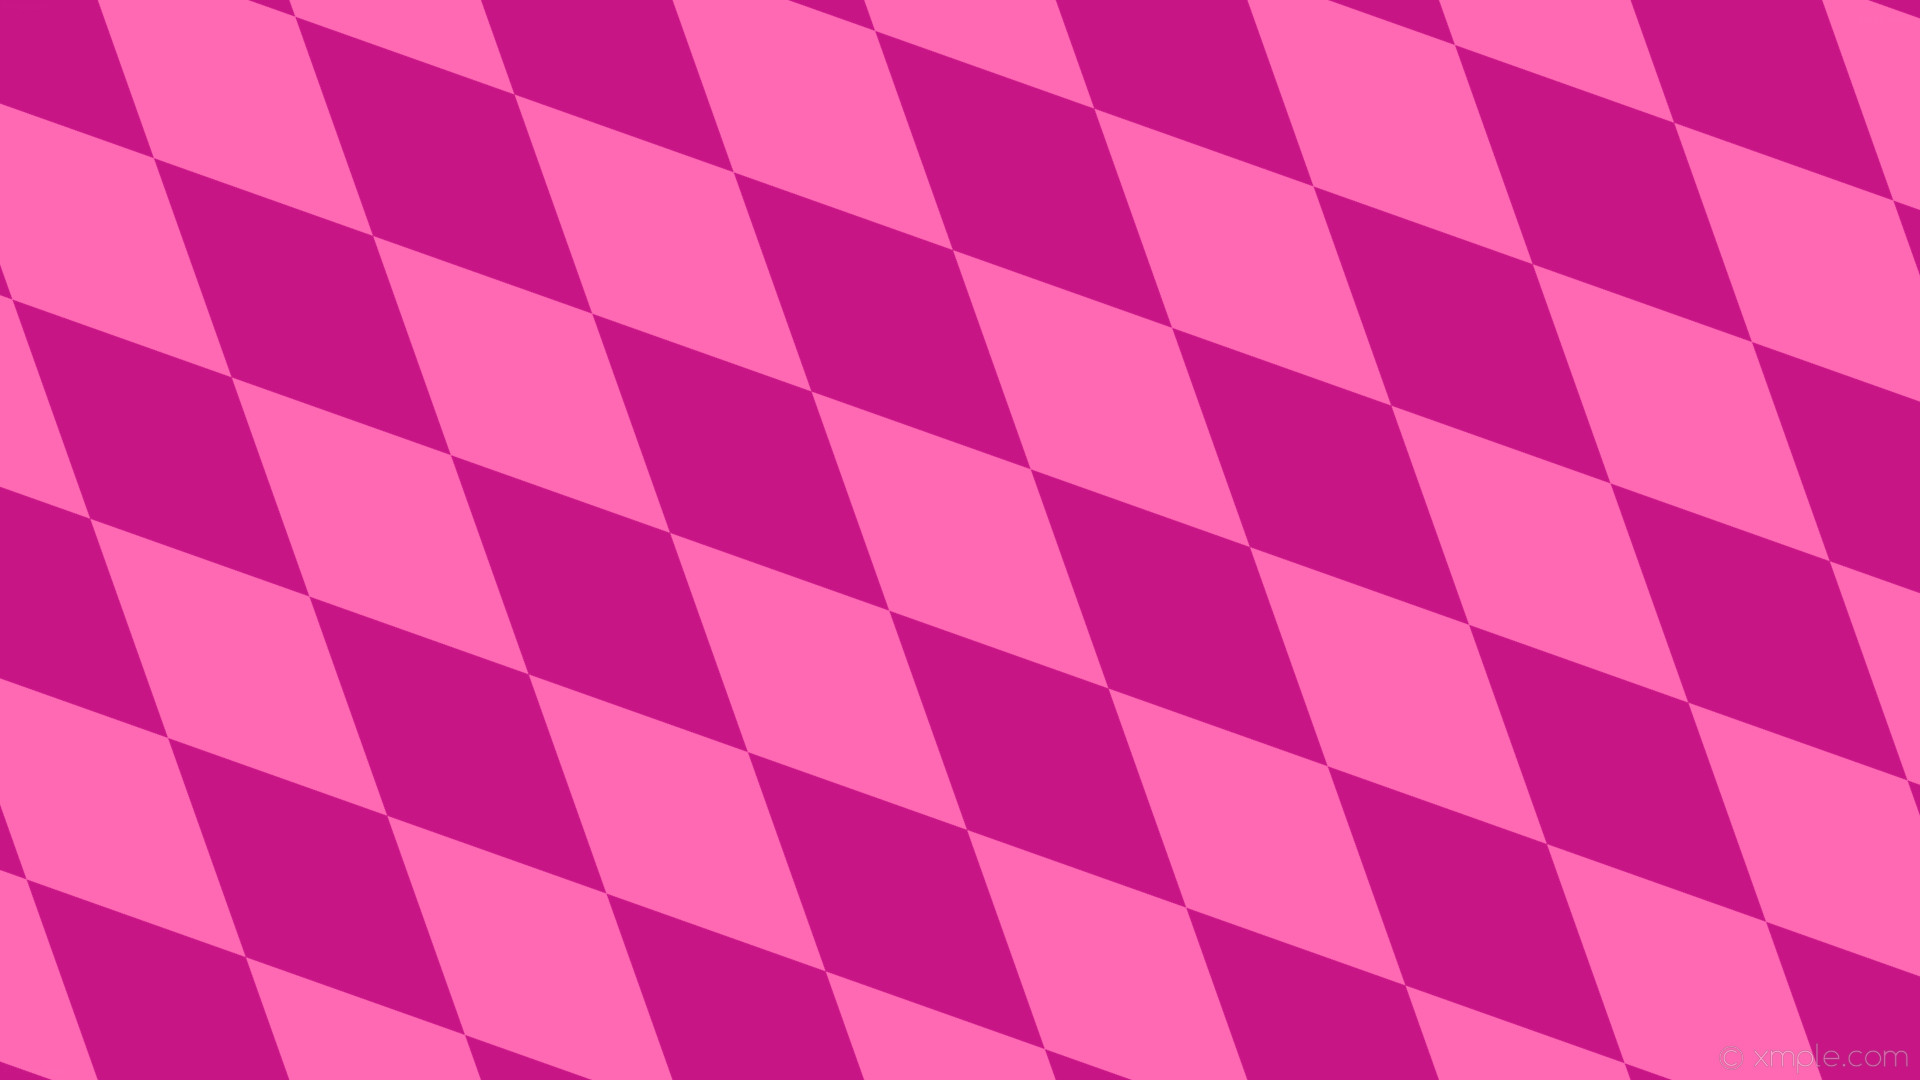 1920x1080 wallpaper pink diamond lozenge rhombus hot pink medium violet red #ff69b4  #c71585 135Â°